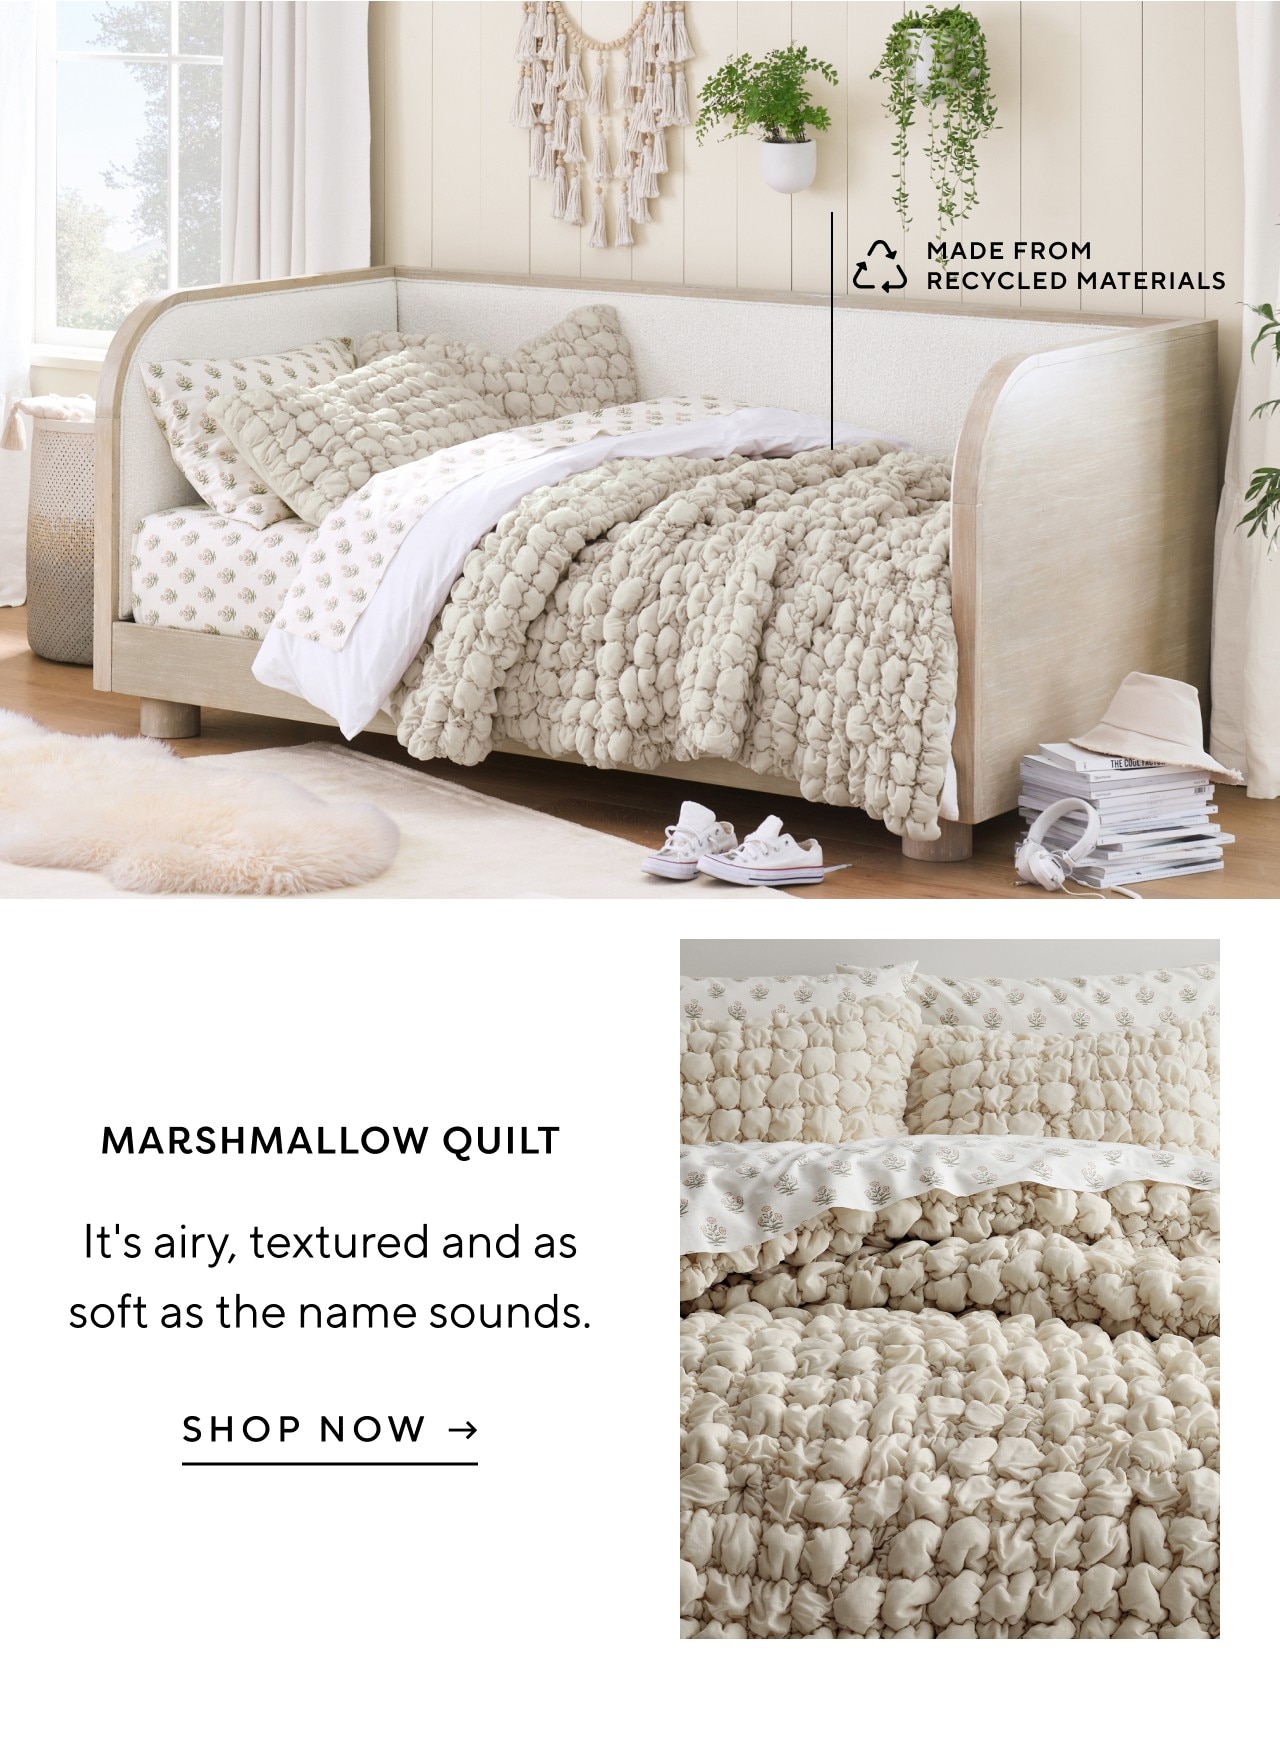 Marshmallow quilt